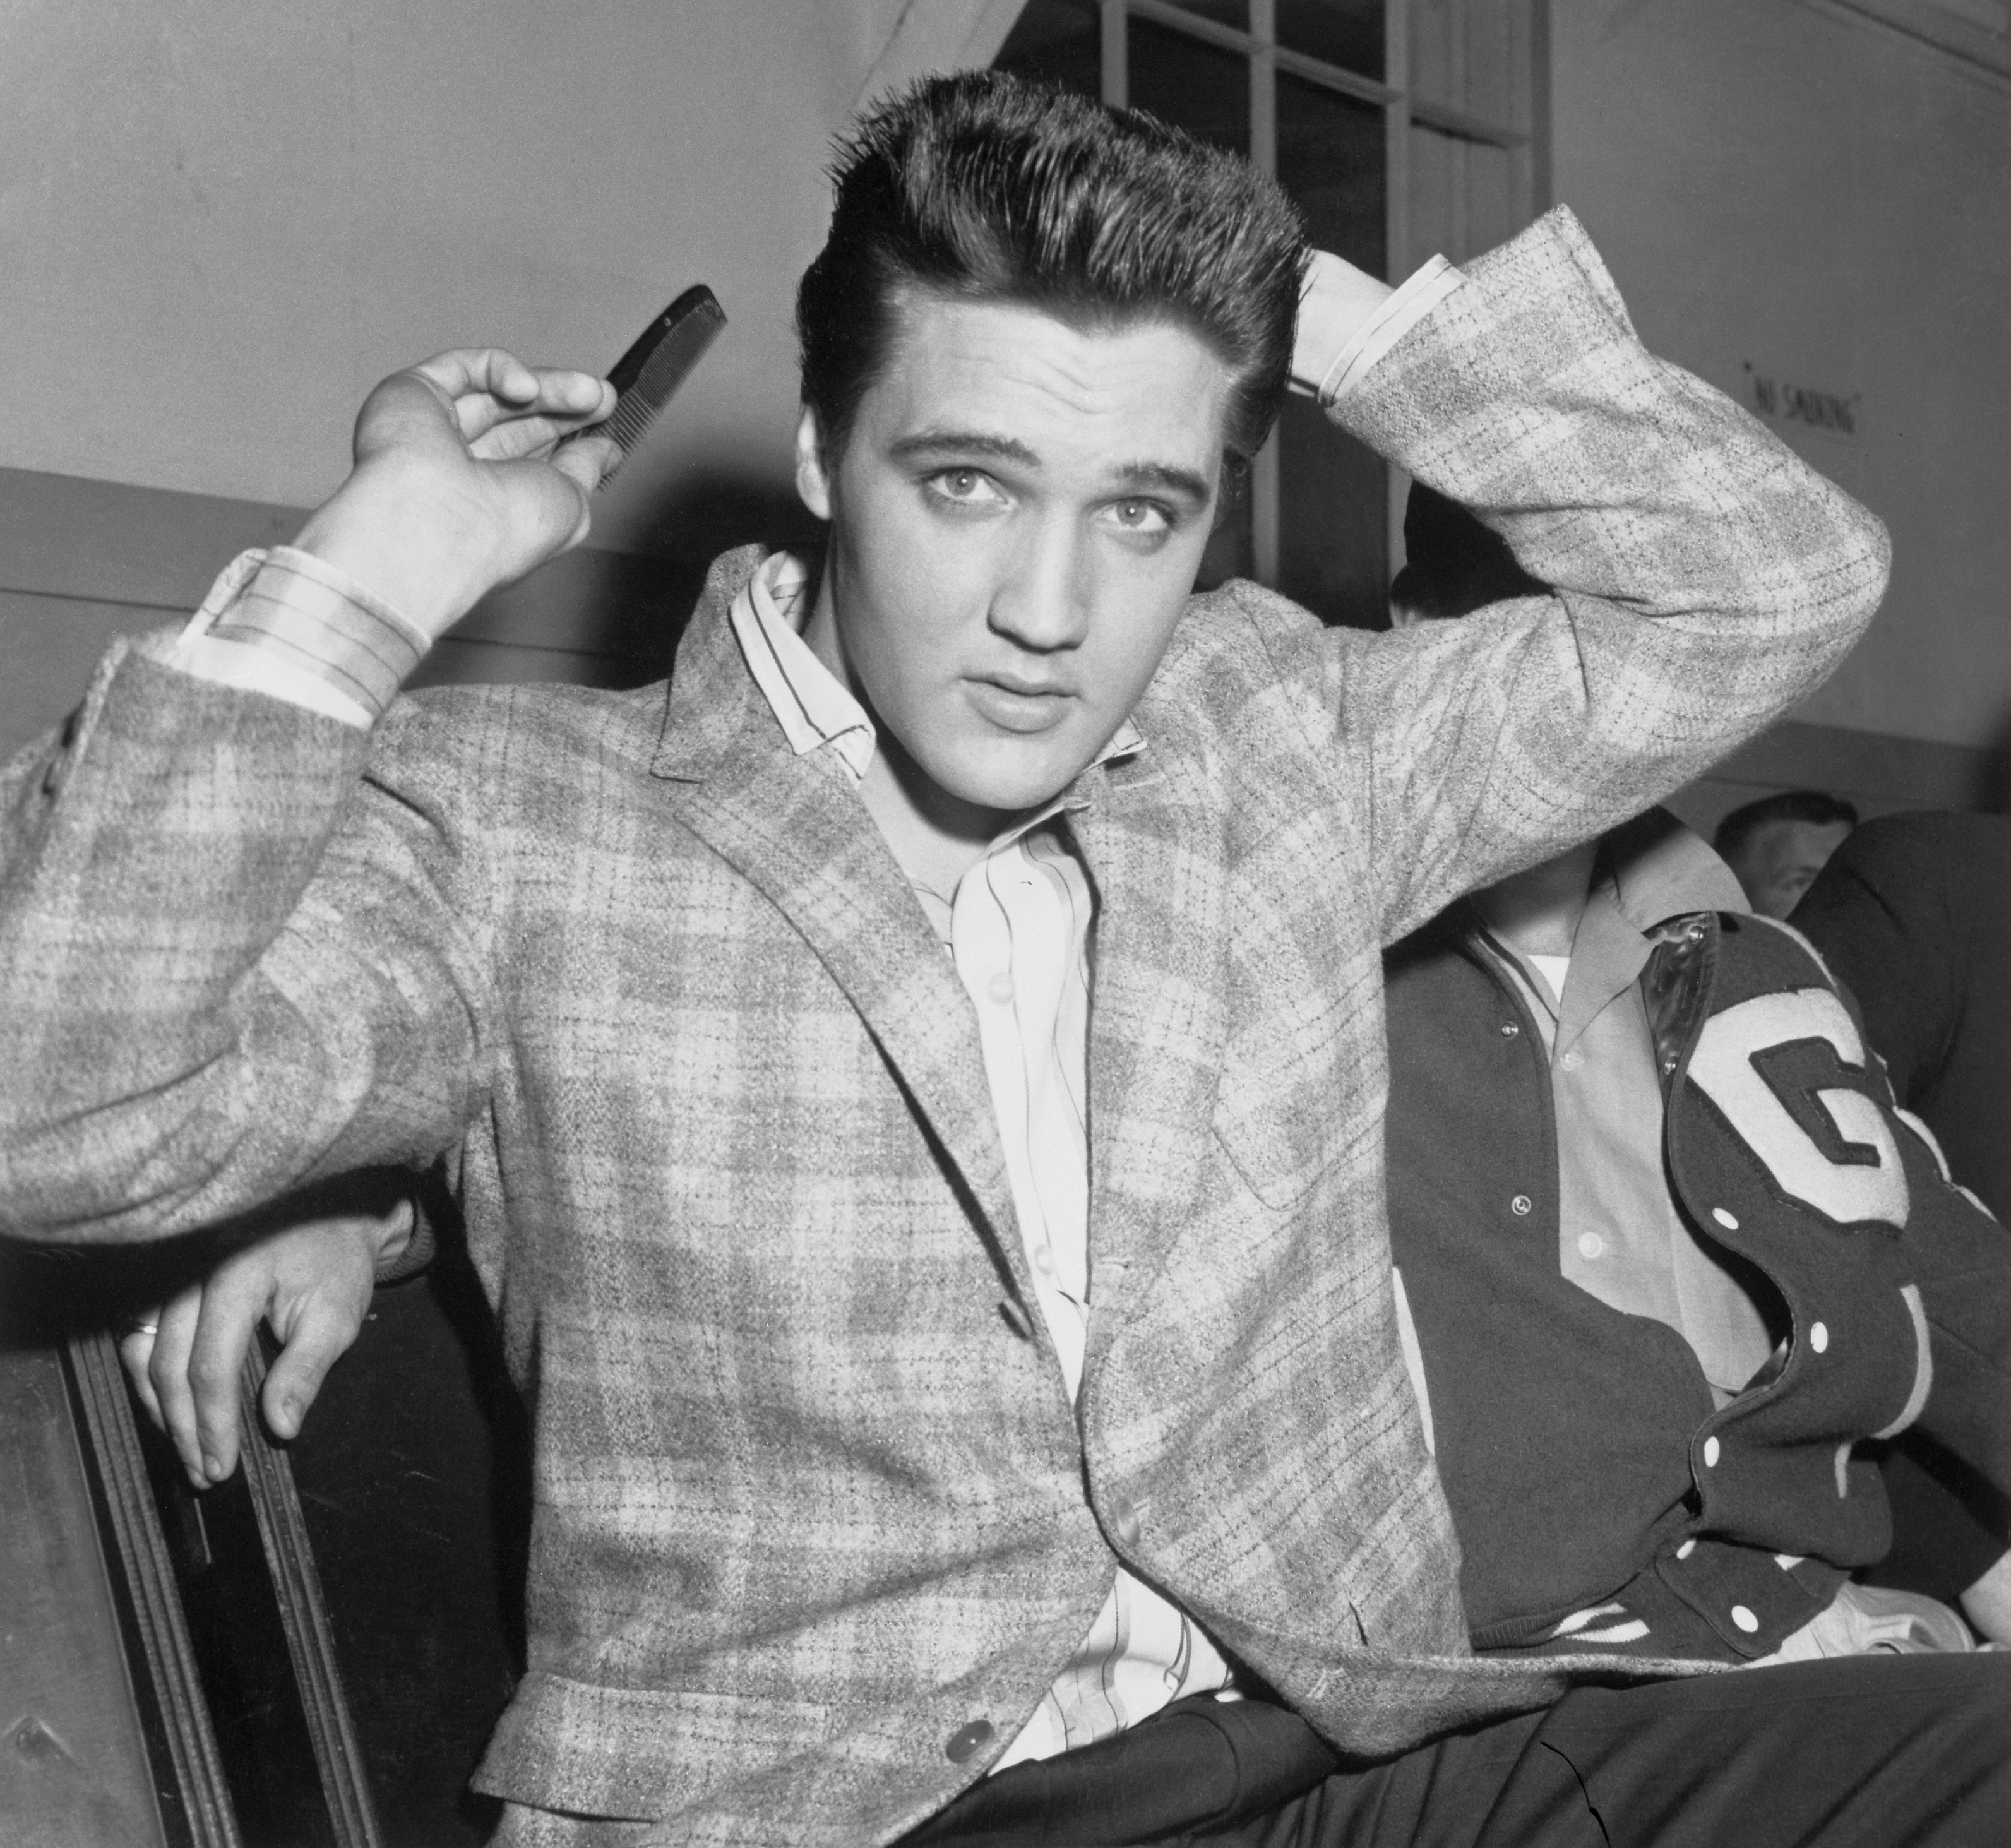 Elvis Presley combing his hair